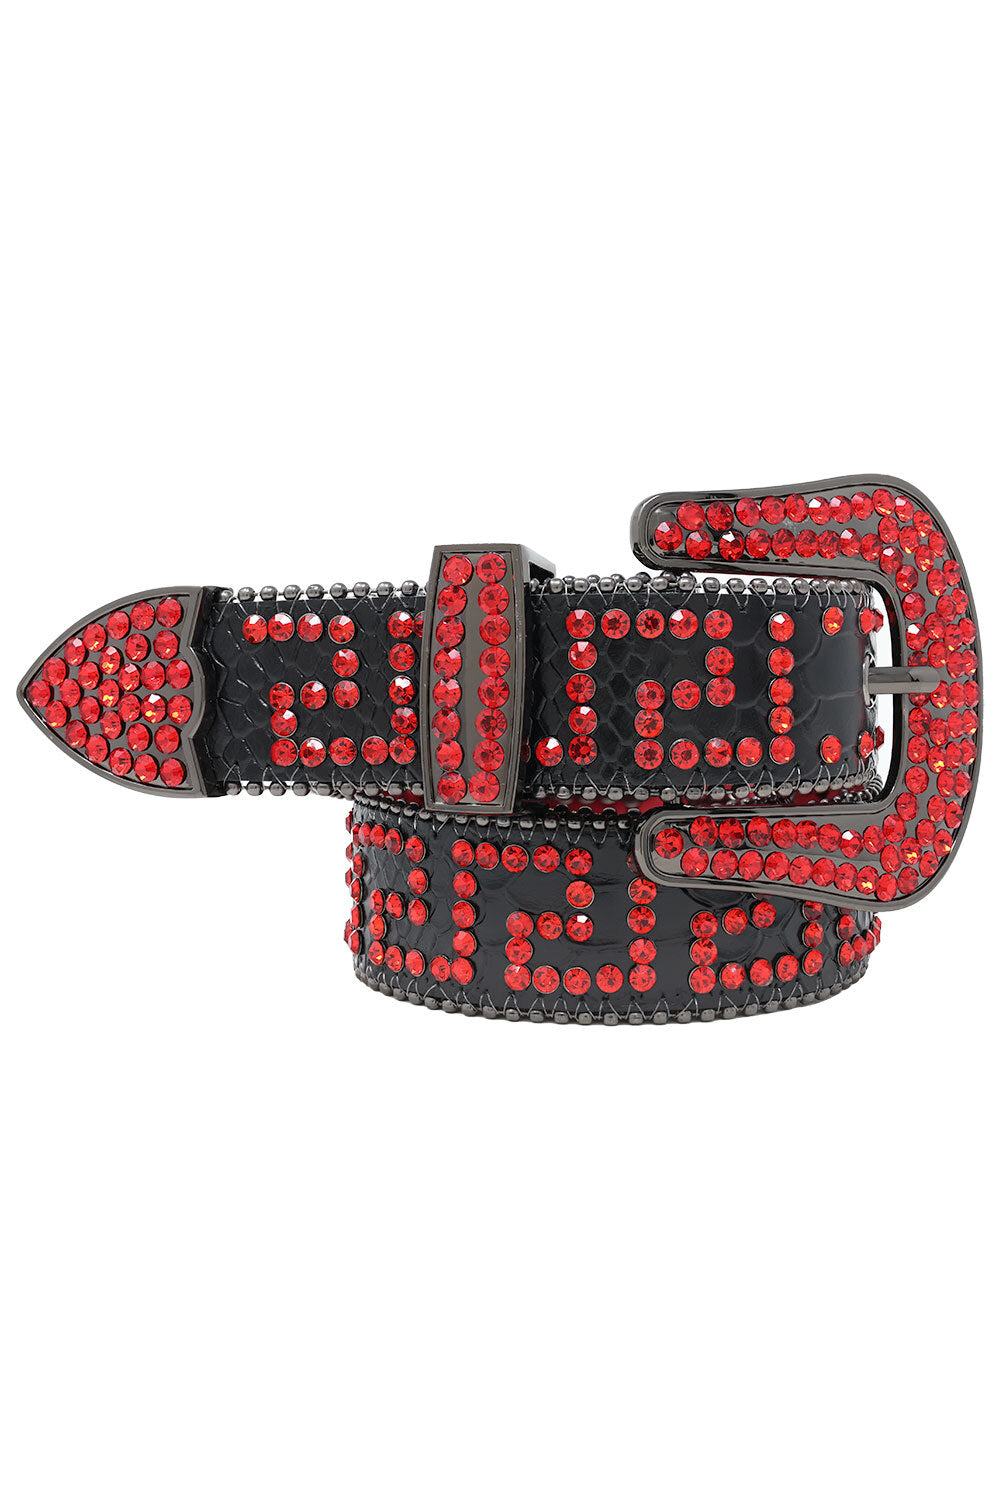 Barabas Men's Greek Key Pattern Rhinestone Leather Belt BK818 Black Red